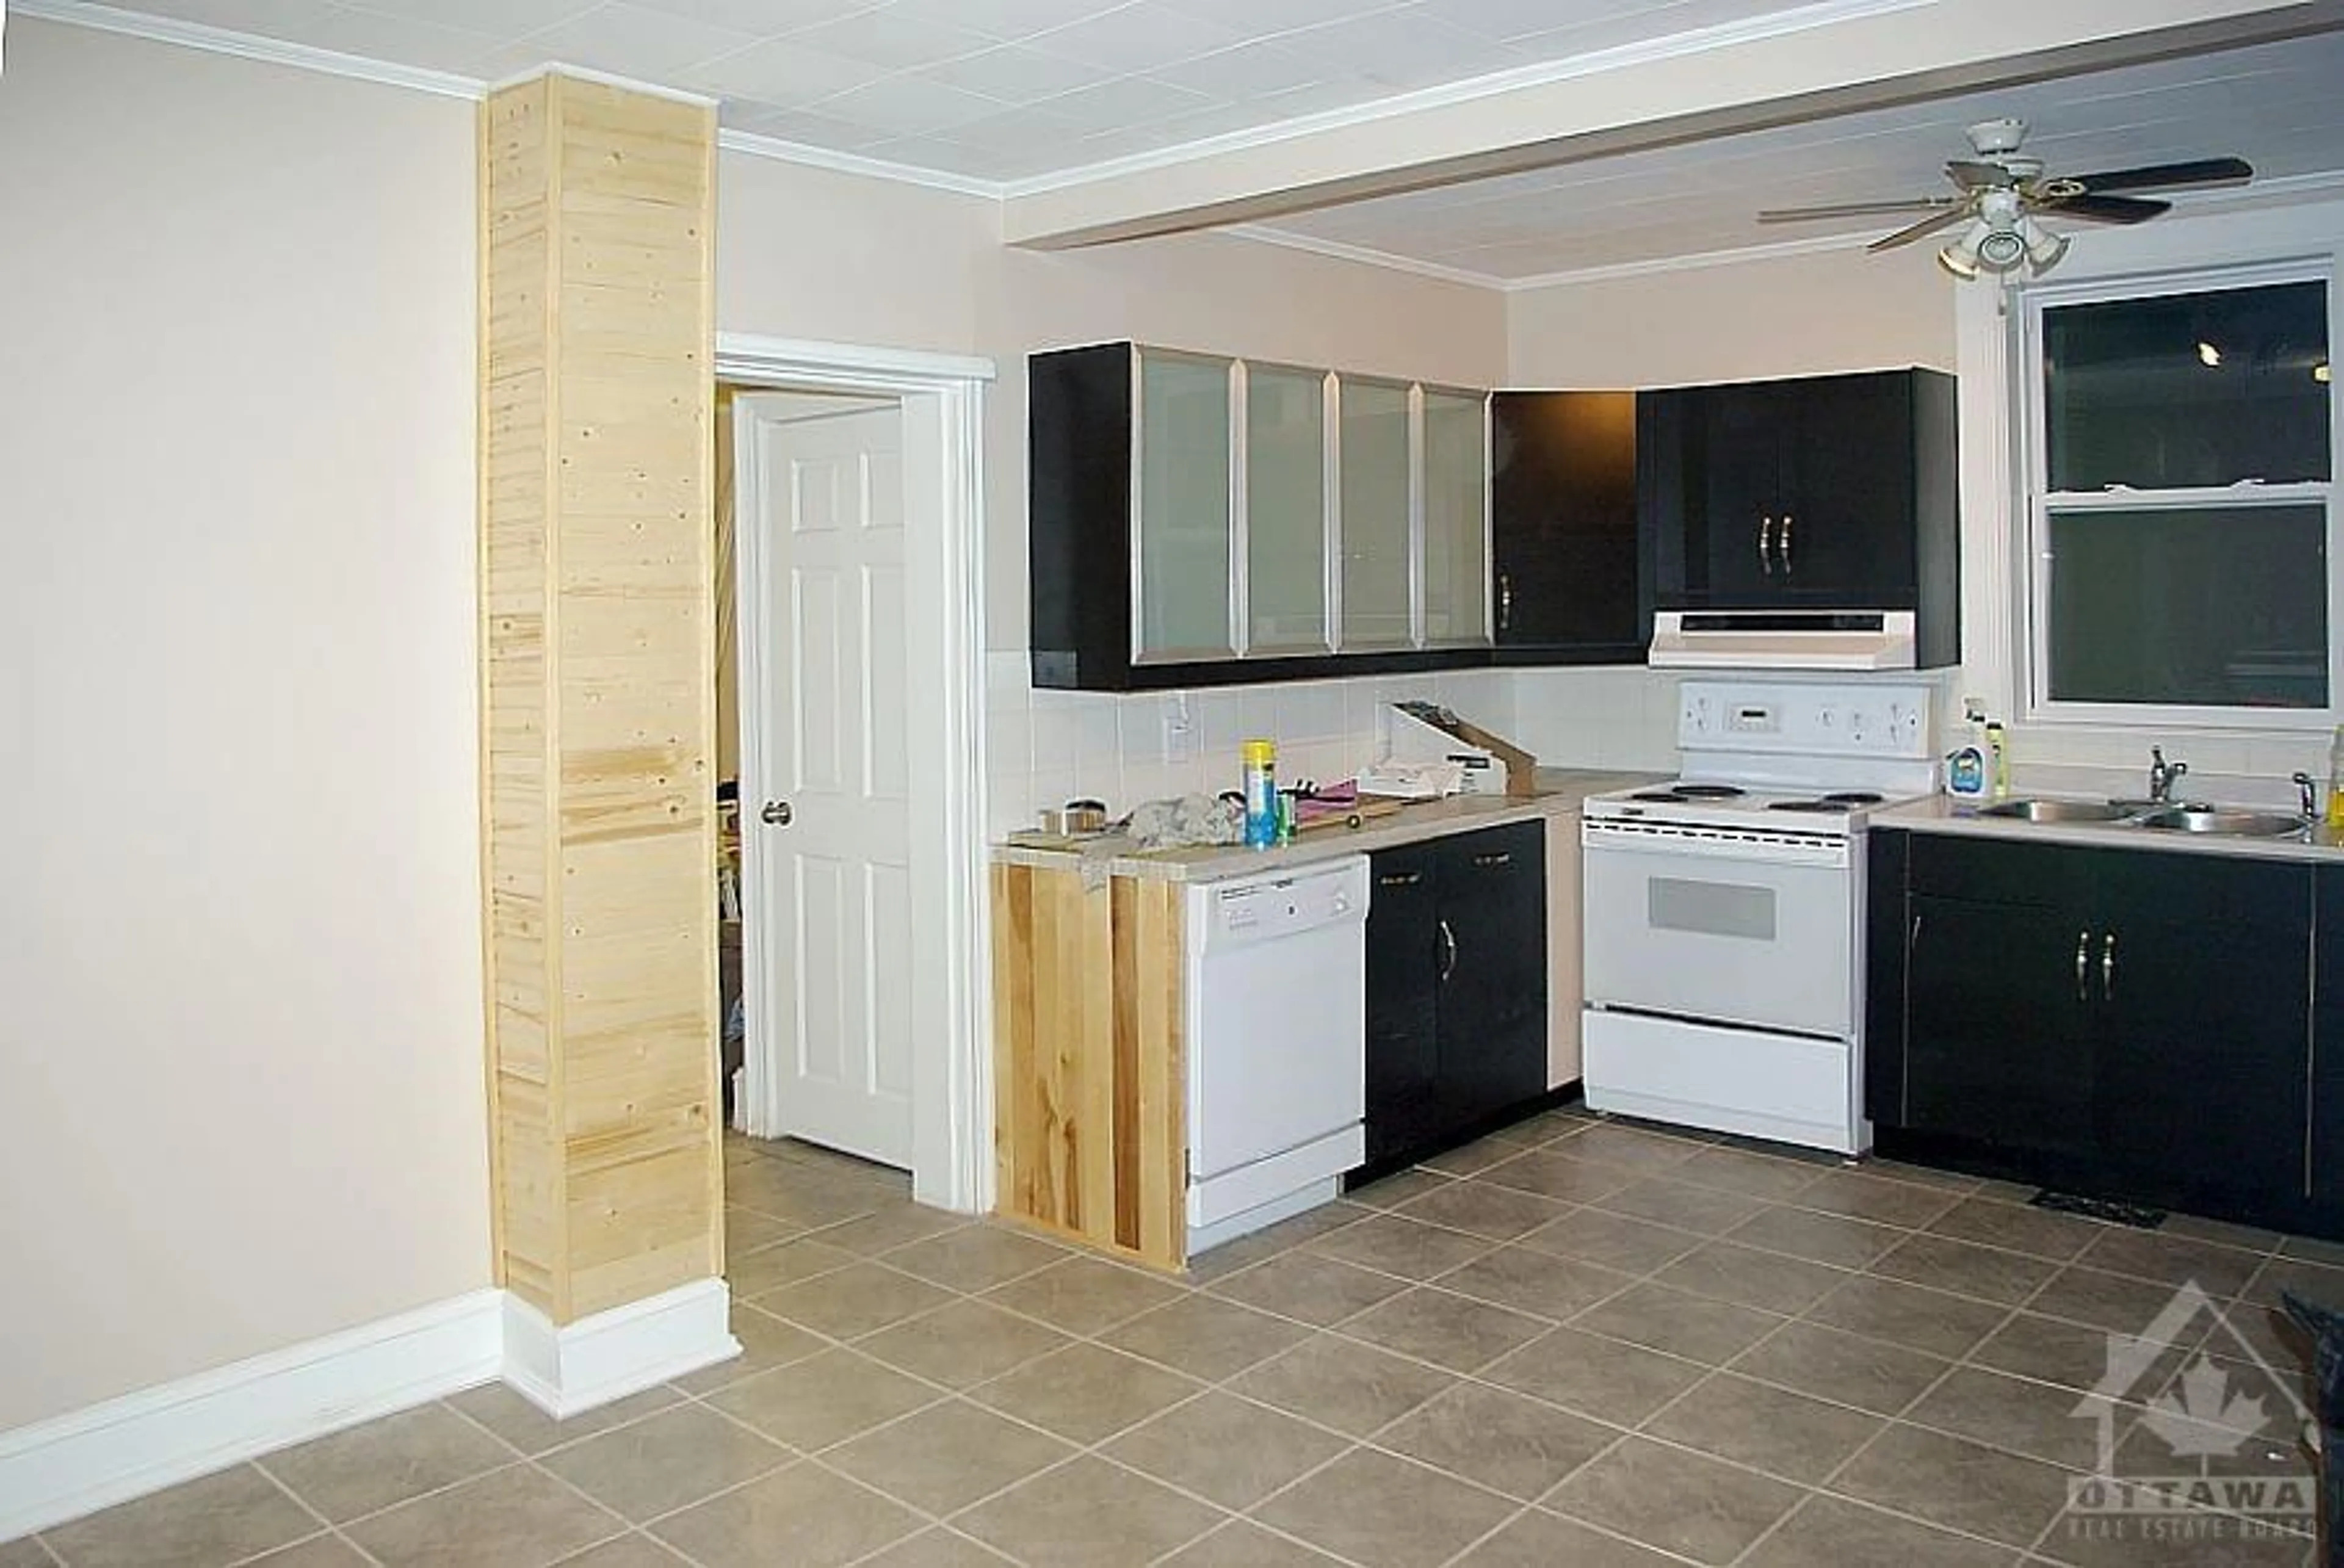 Standard kitchen for 45 CARLETON St, Almonte Ontario K0A 1A0